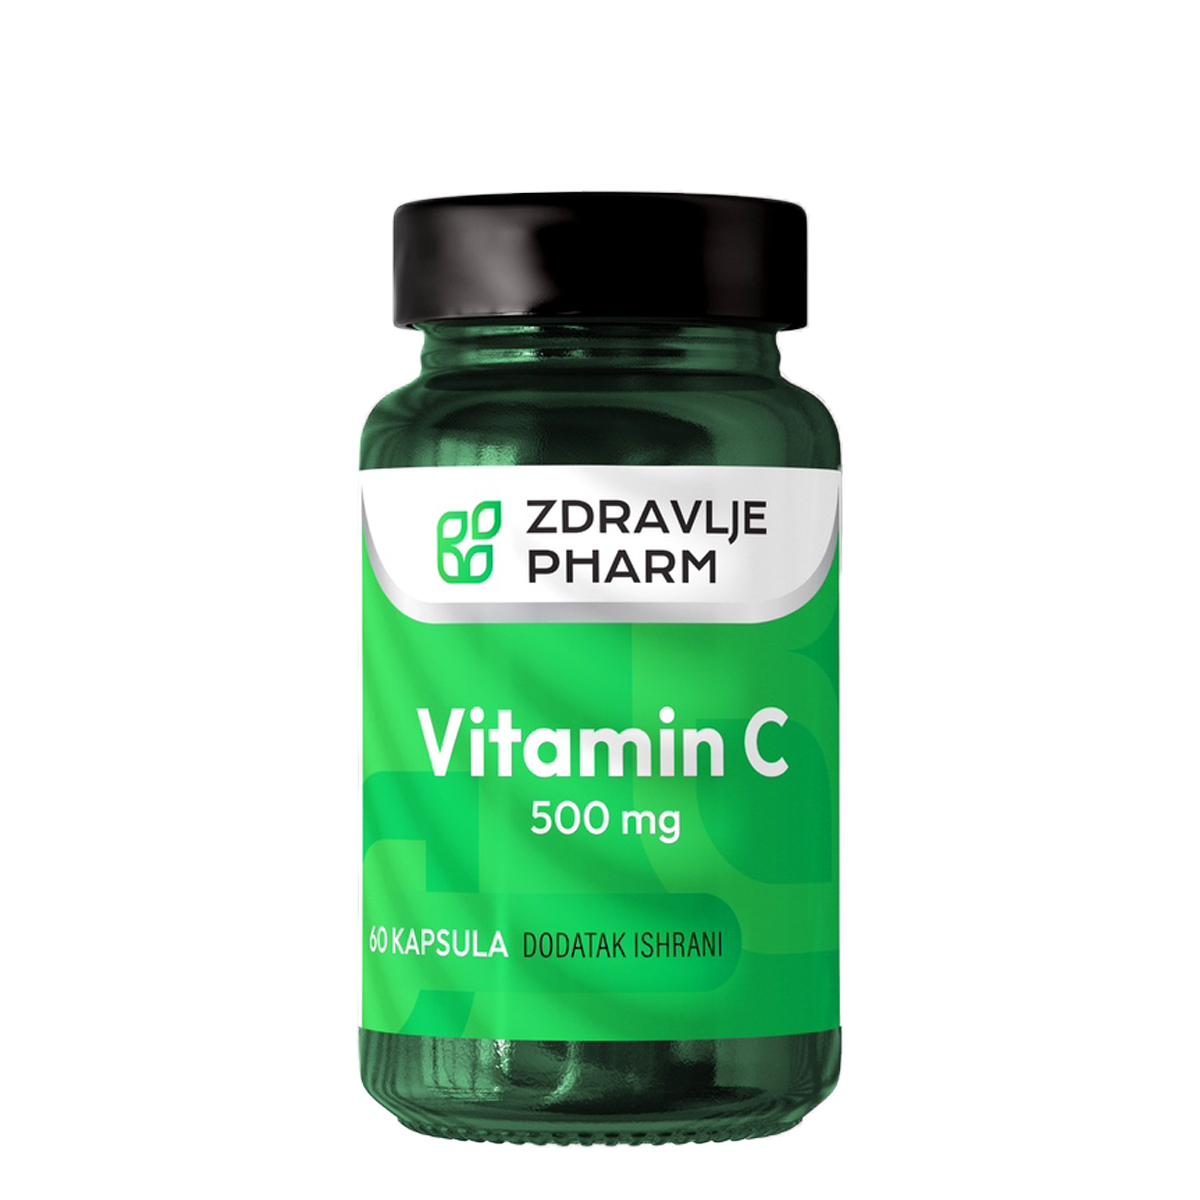 ZDRAVLJE PHARM Vitamin C 500mg 60 kapsula